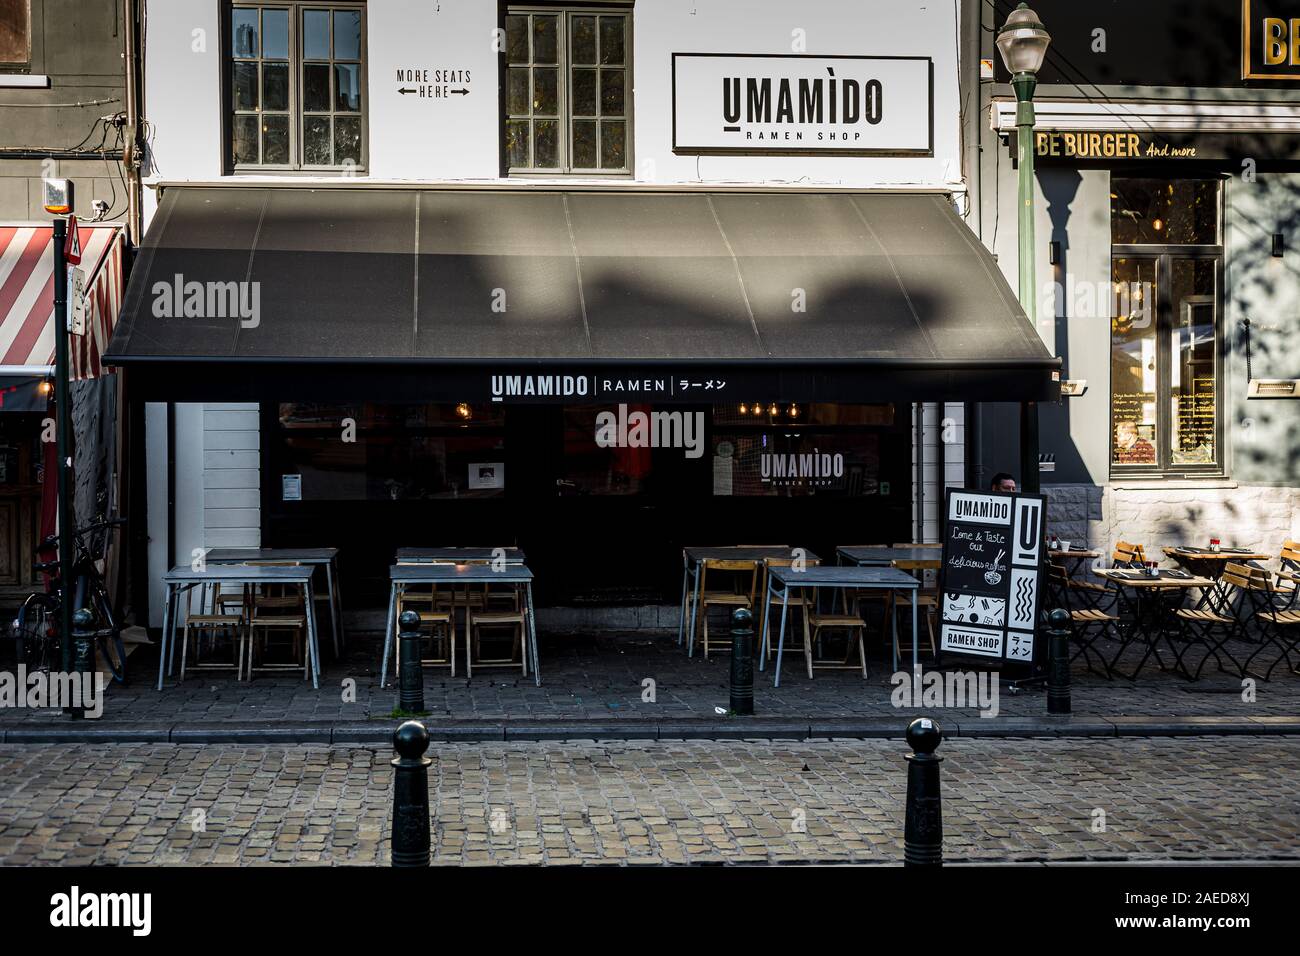 Umamido restaurant, Brussels, Belgium Stock Photo